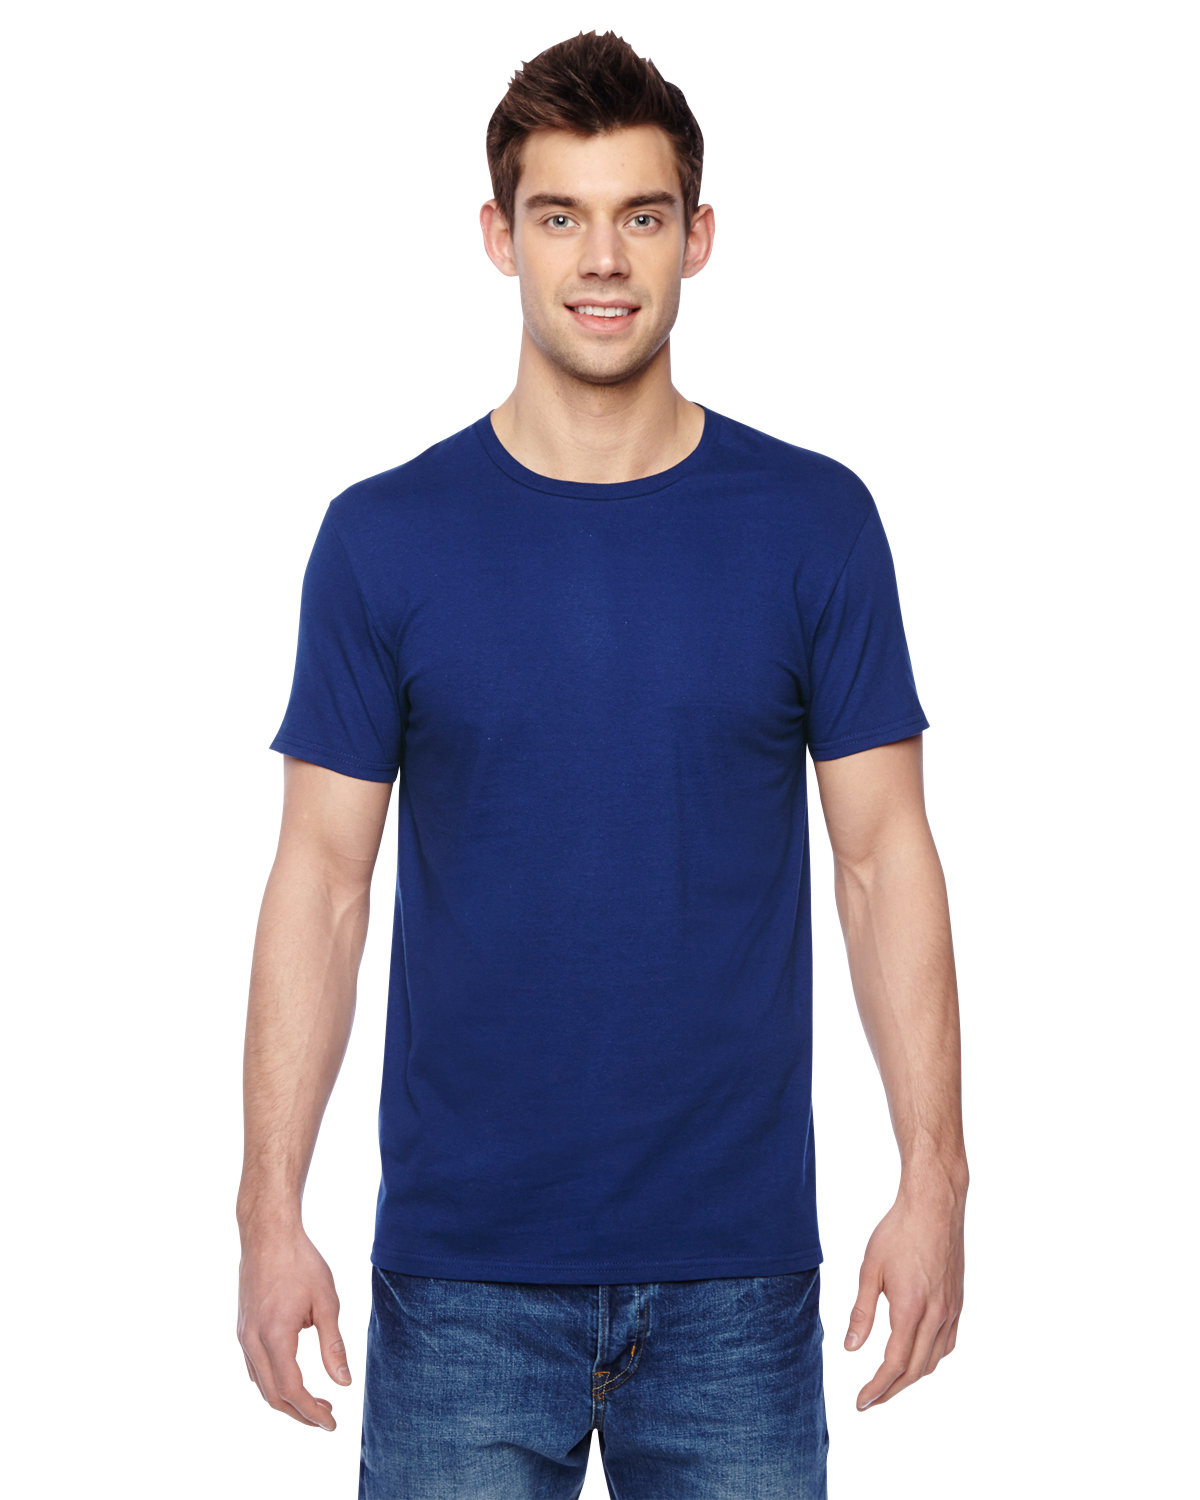 Fruit of the Loom Adult Sofspun® Jersey Crew T-Shirt ADMIRAL BLUE 